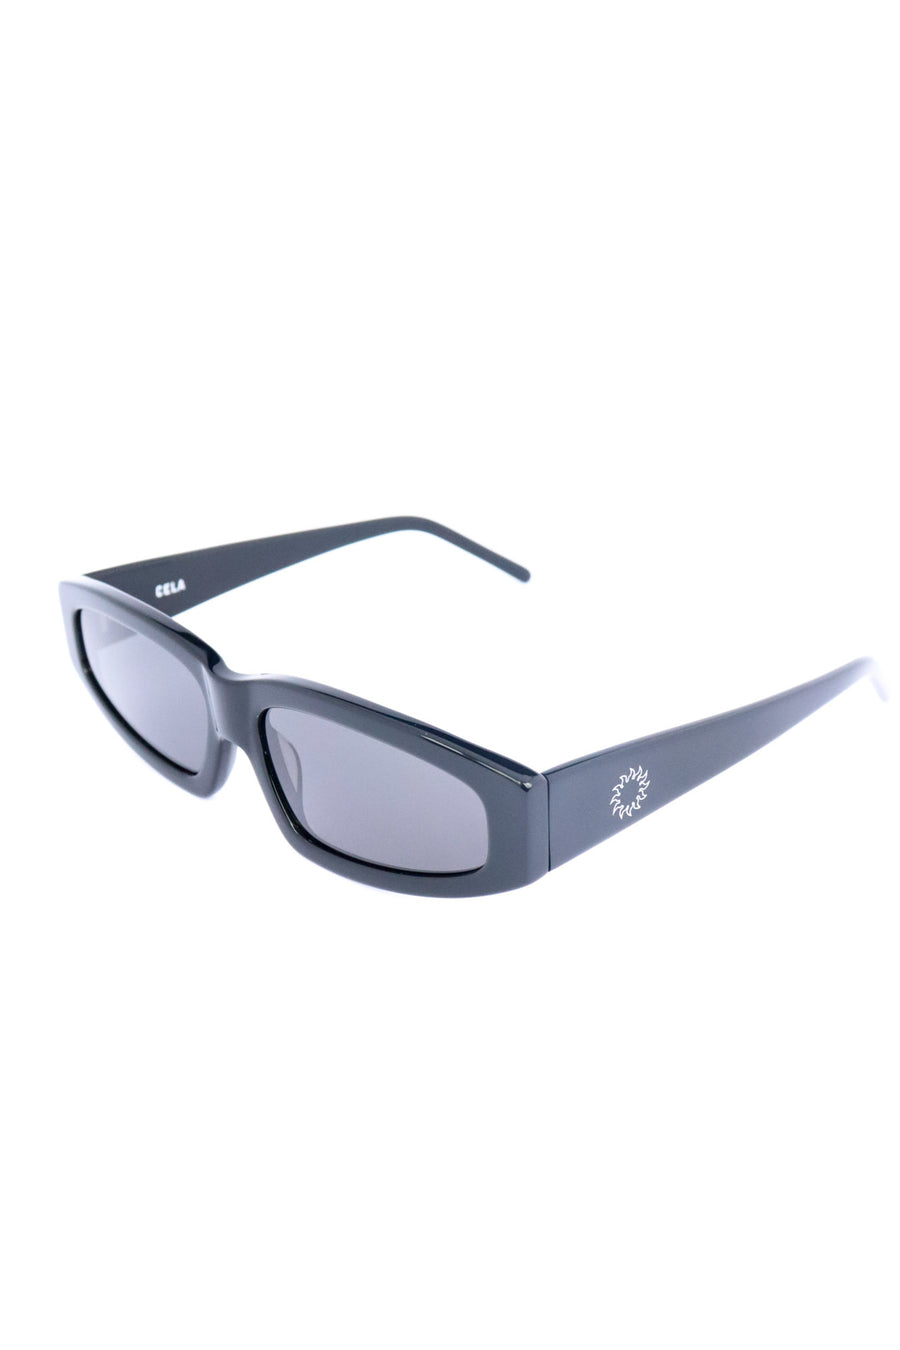 Avoir Eyewear - Cela in Navy - Sunglasses